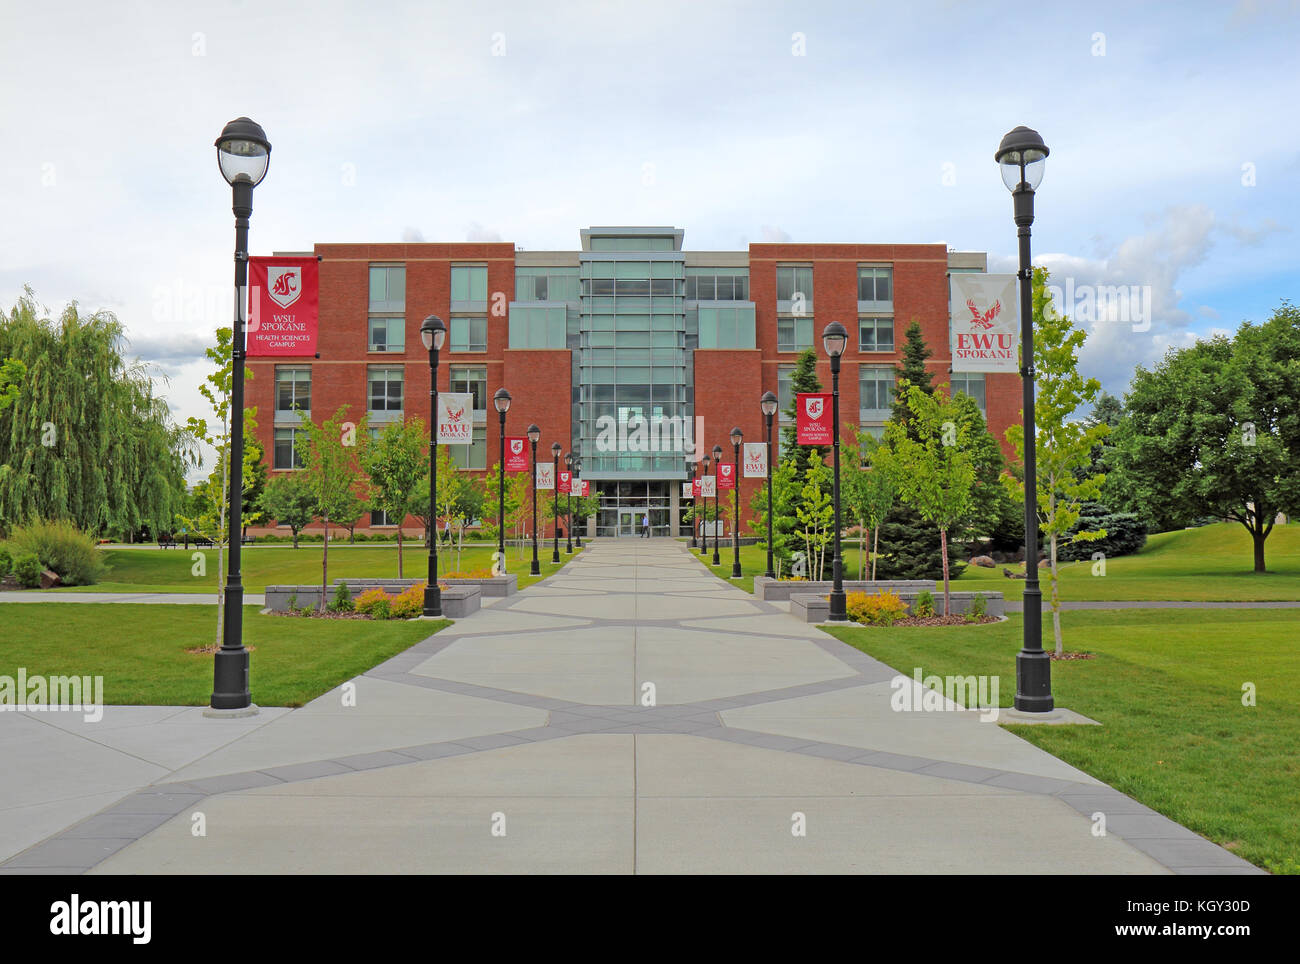 SPOKANE, WASHINGTON - JUNE 2 2016: The Academic Center building on the urban campus of Washington State University Health Sciences Spokane, which offe Stock Photo